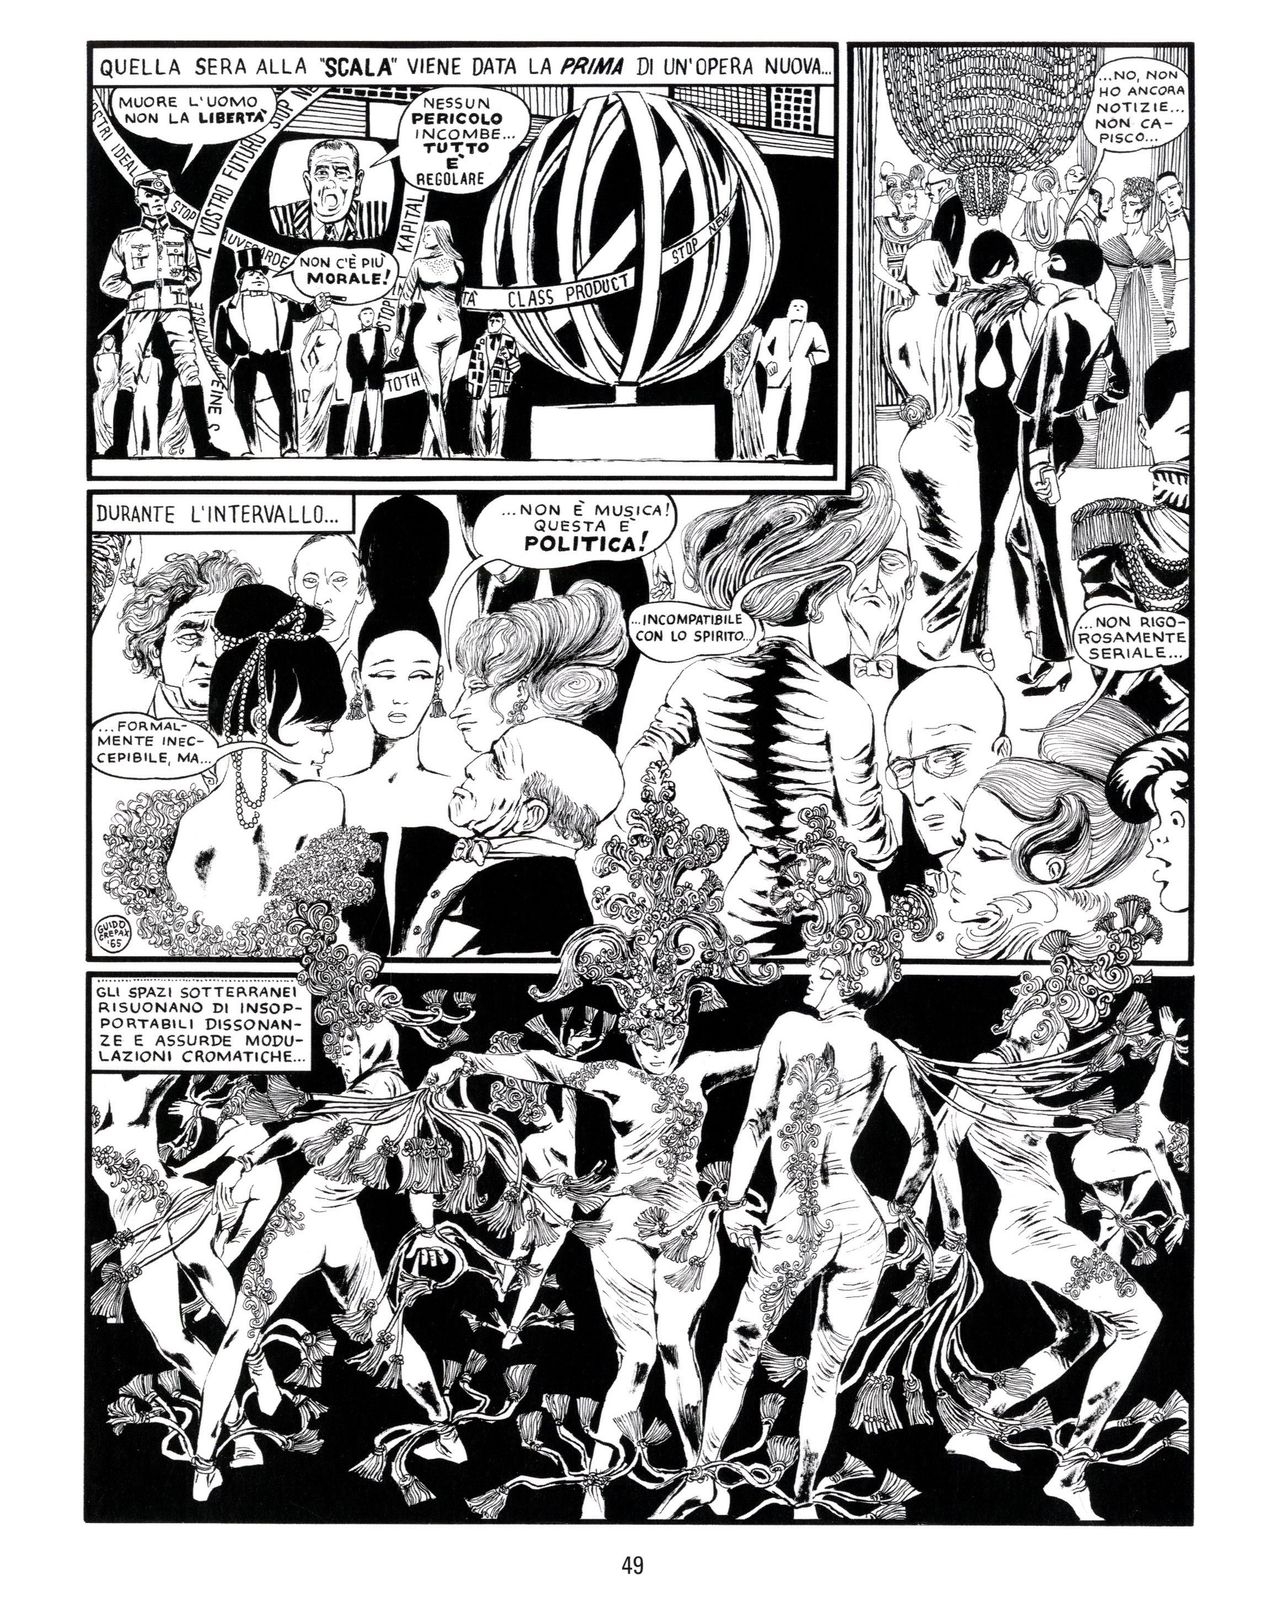 [Guido Crepax] Erotica Fumetti #25 : L'ascesa dei sotterranei : I cavalieri ciechi [Italian] 50